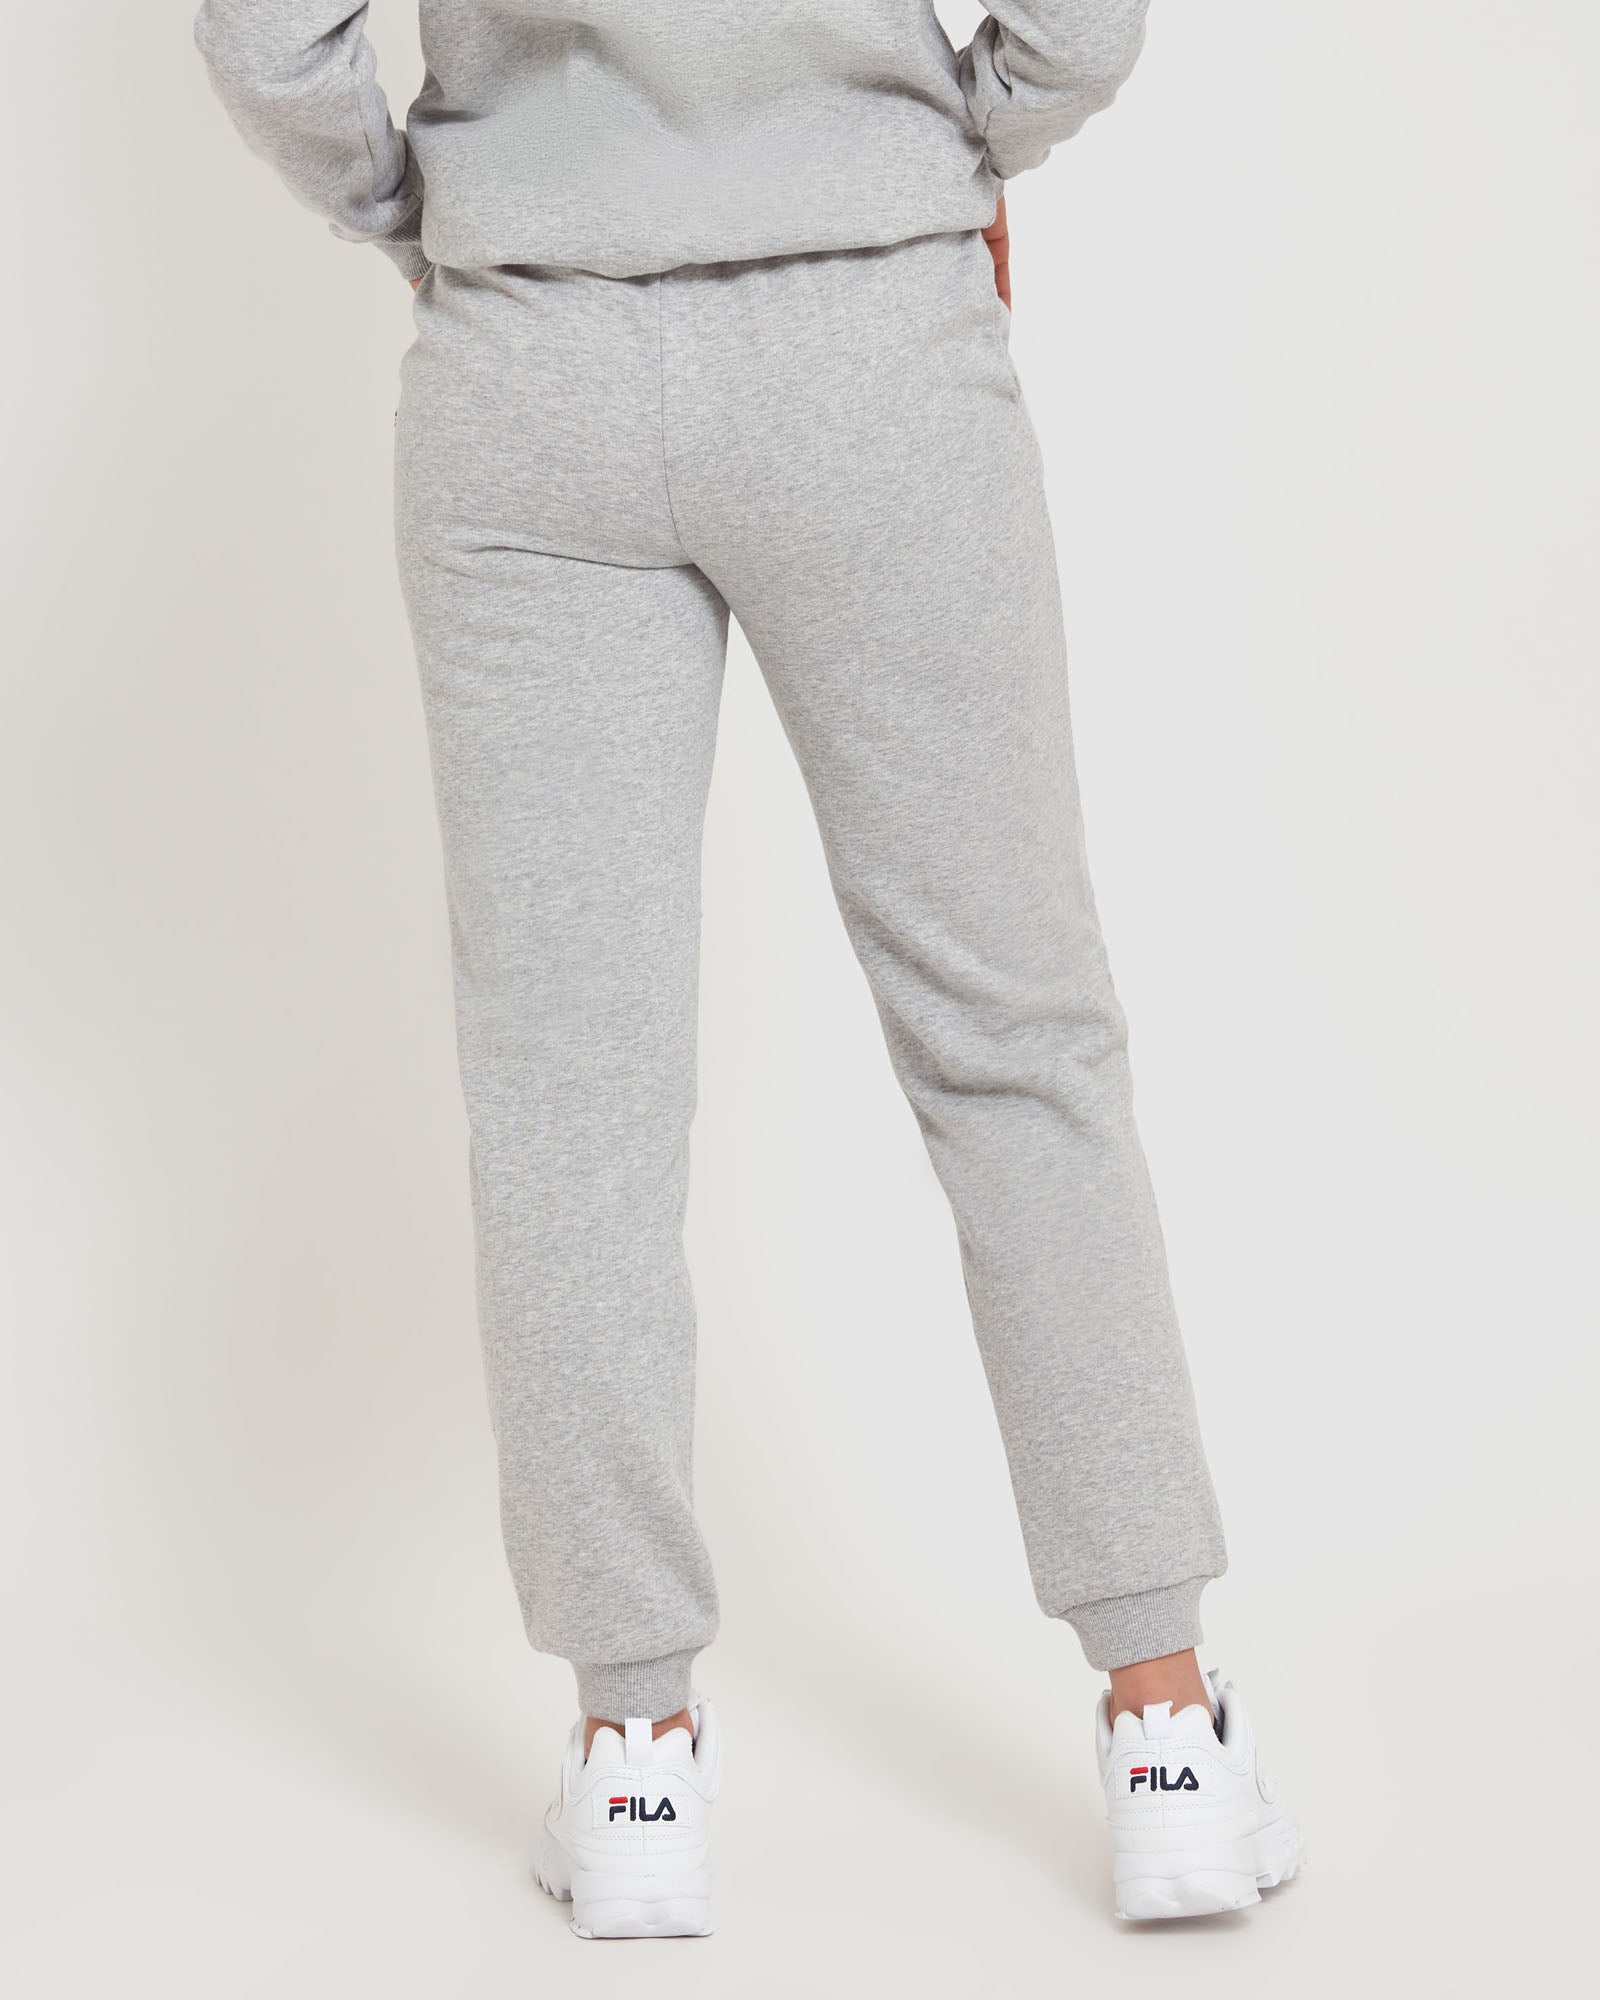 Buy Fila Ella Training Pants Women Grey, White online